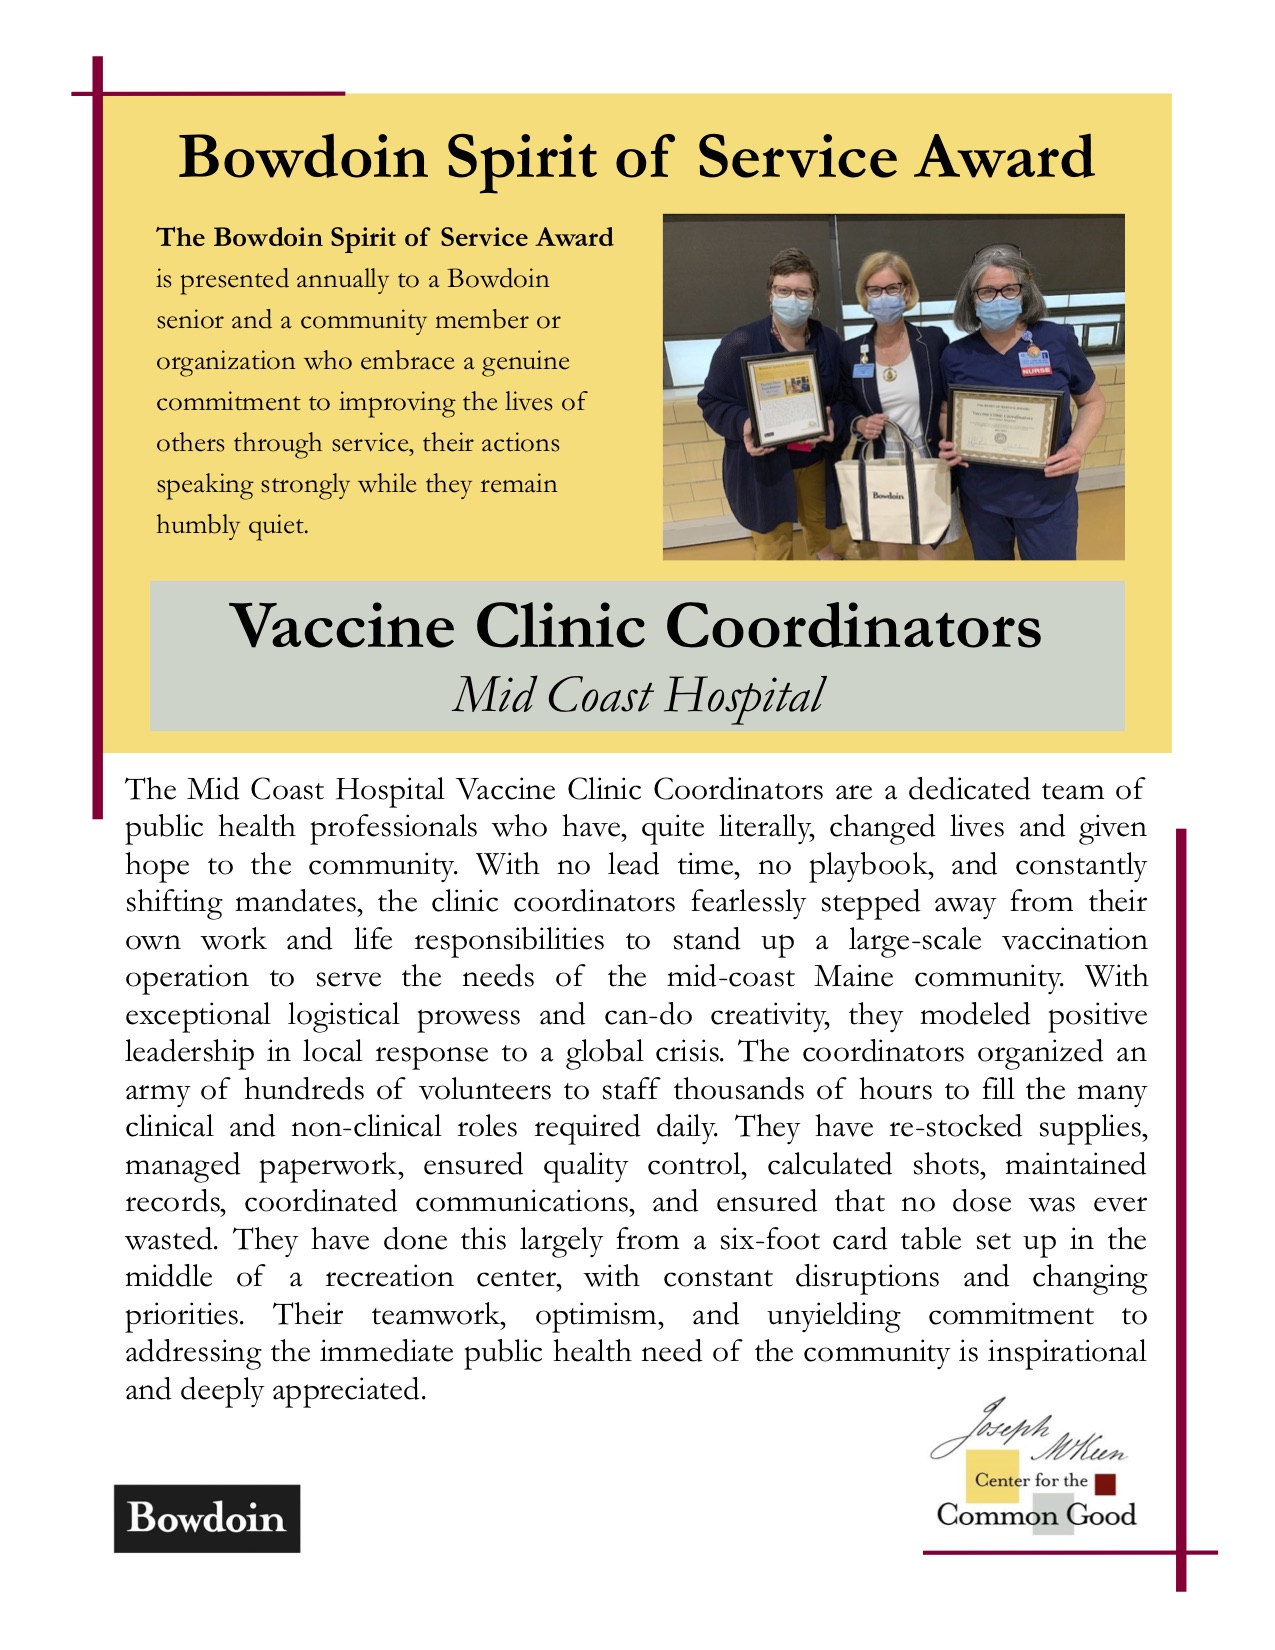 Vaccine clinic